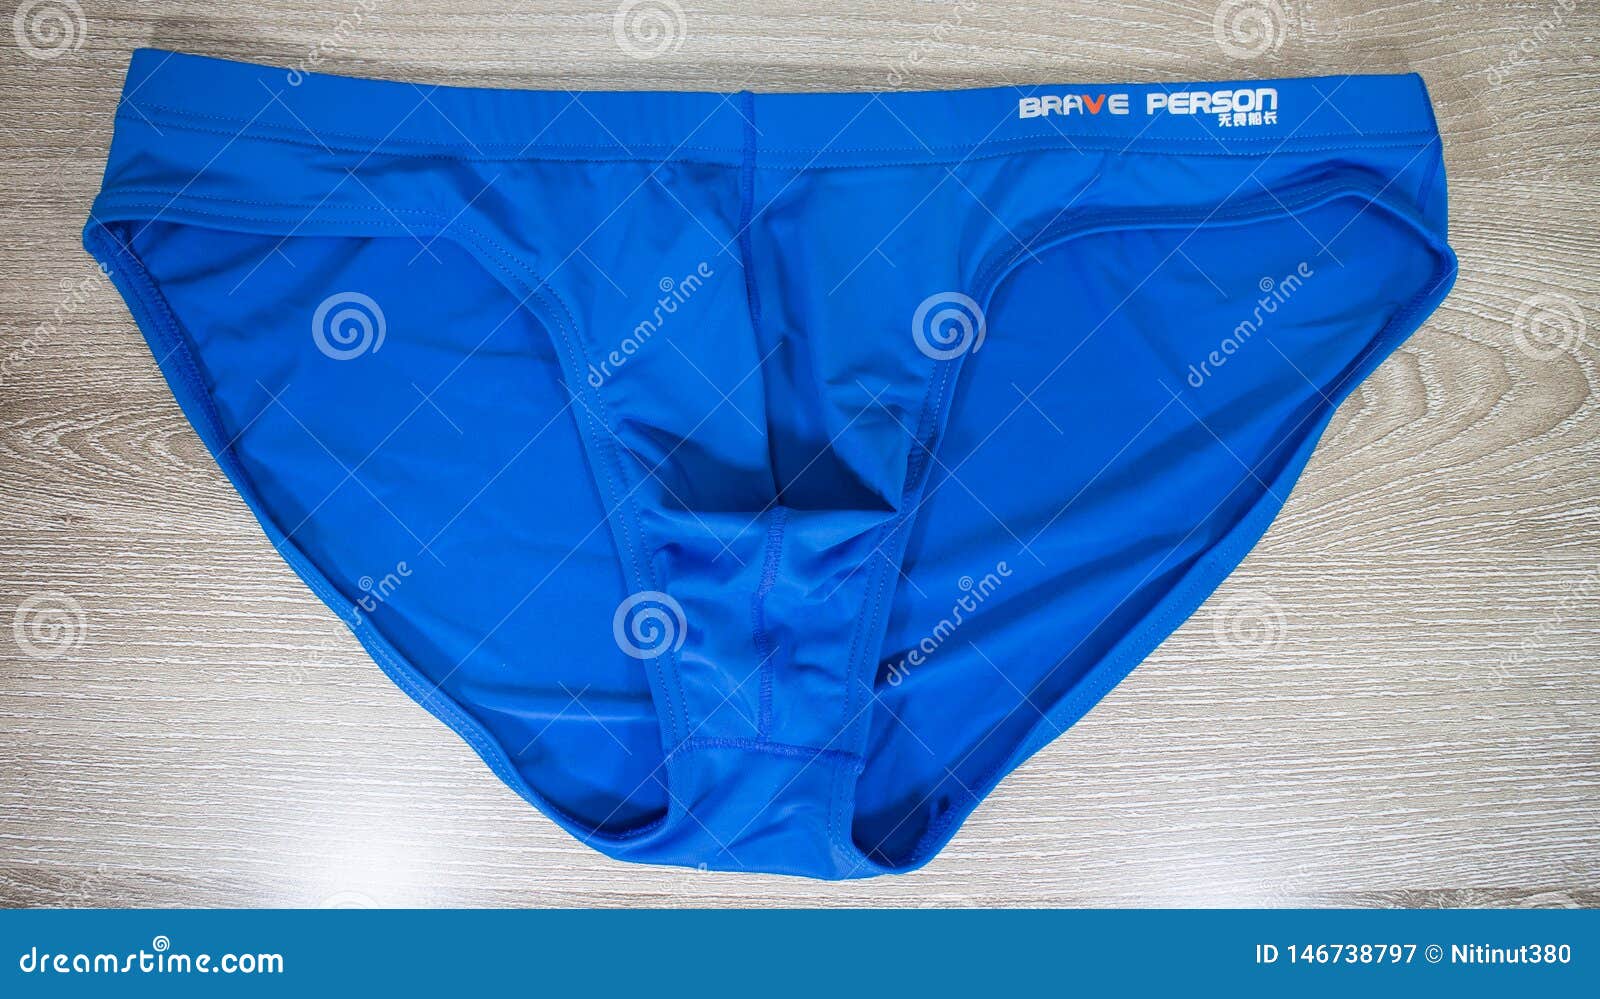 Brave Person China Brand Men Underwear Editorial Photography